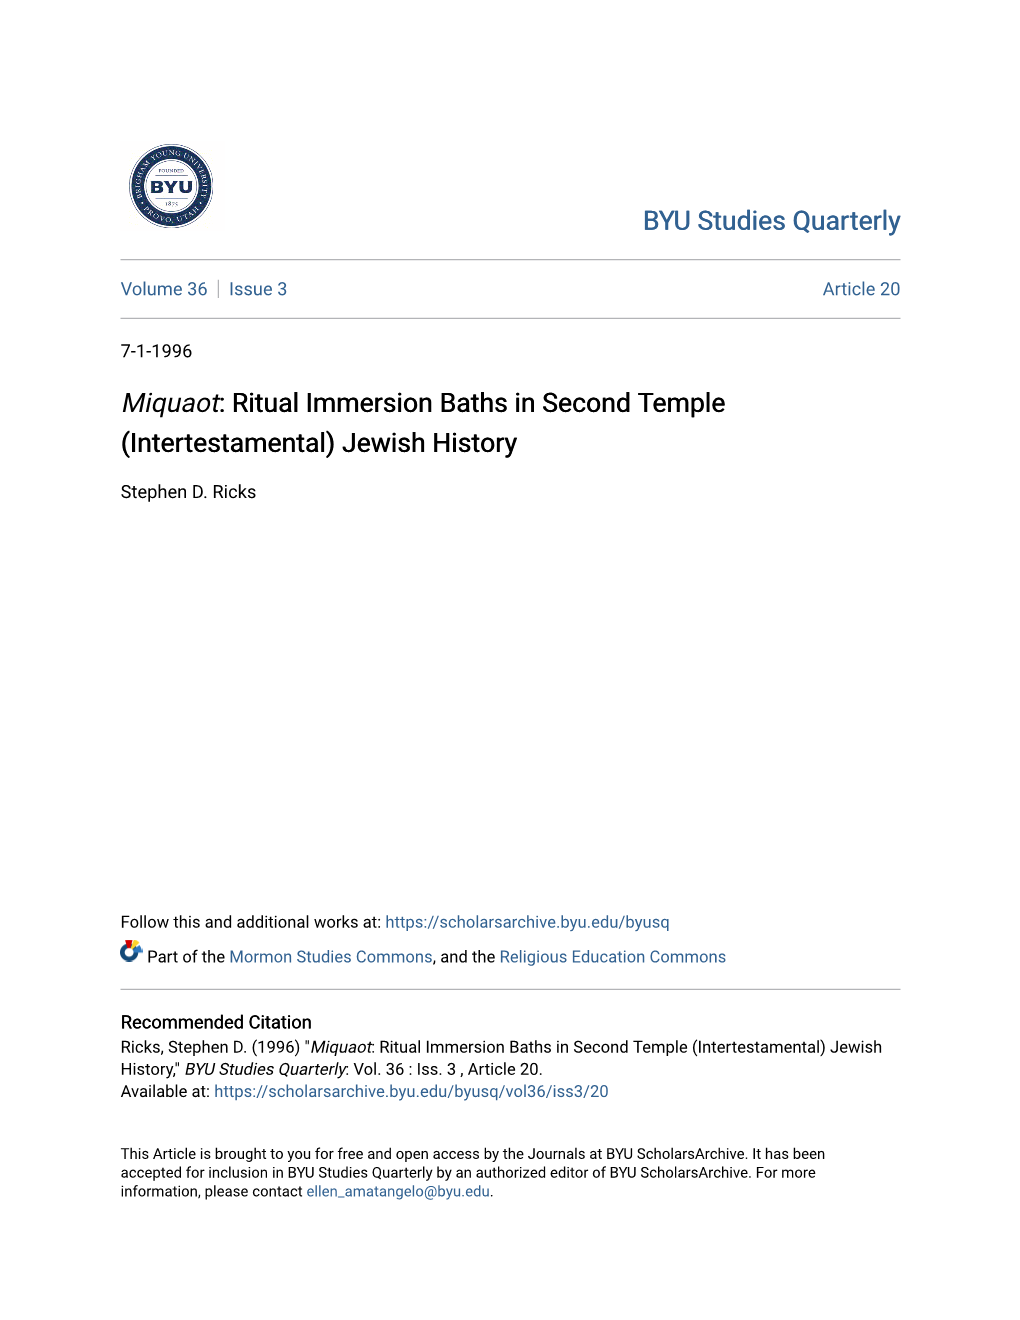 Miquaot: Ritual Immersion Baths in Second Temple (Intertestamental) Jewish History